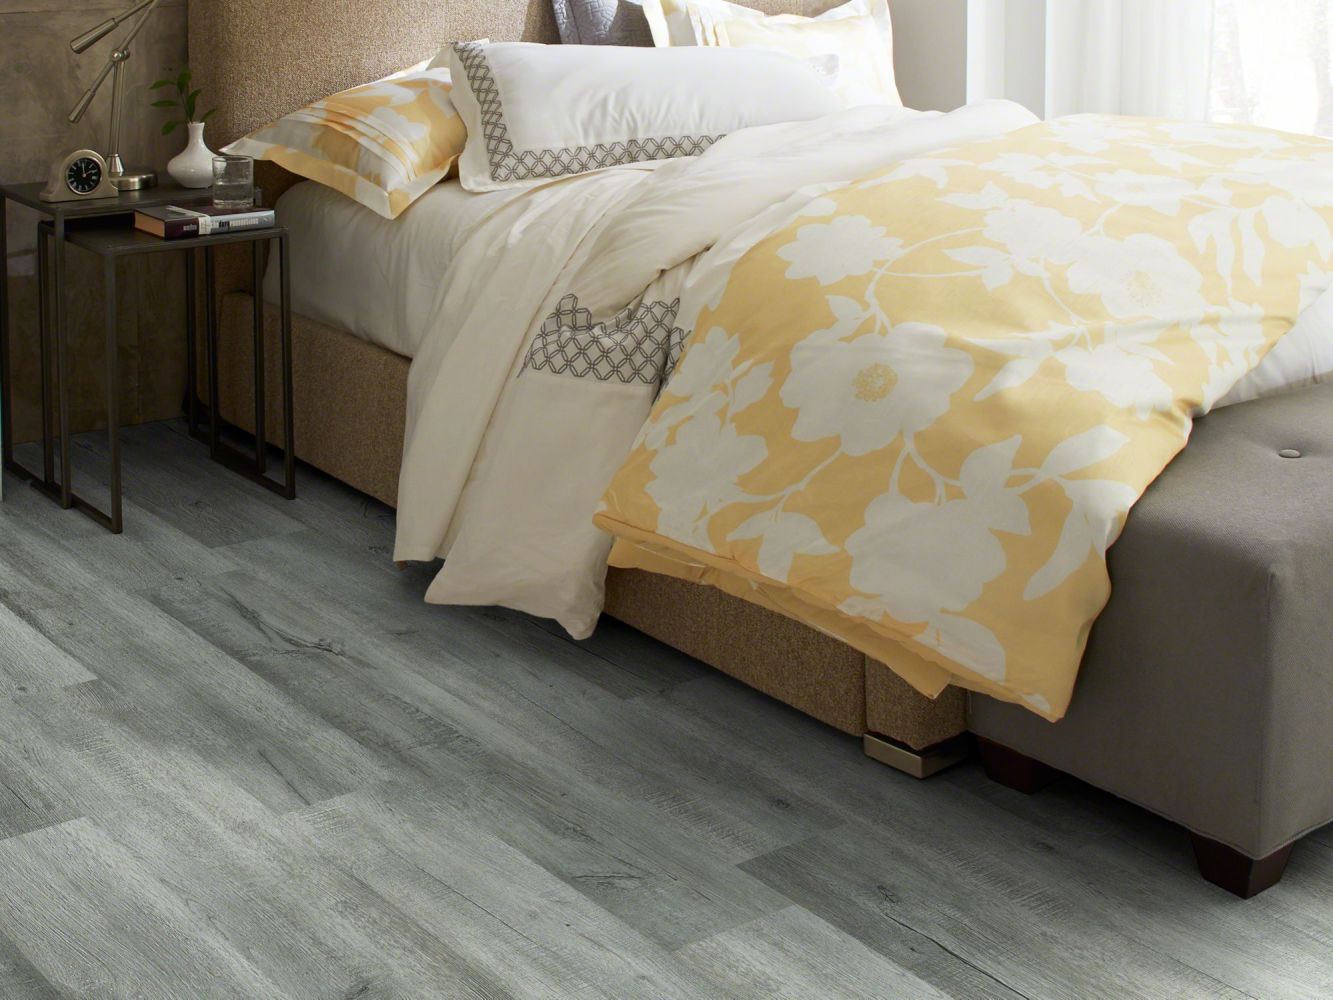 Shaw Floors SFA Cornerstone Plank Greyed Oak 00532_SA629